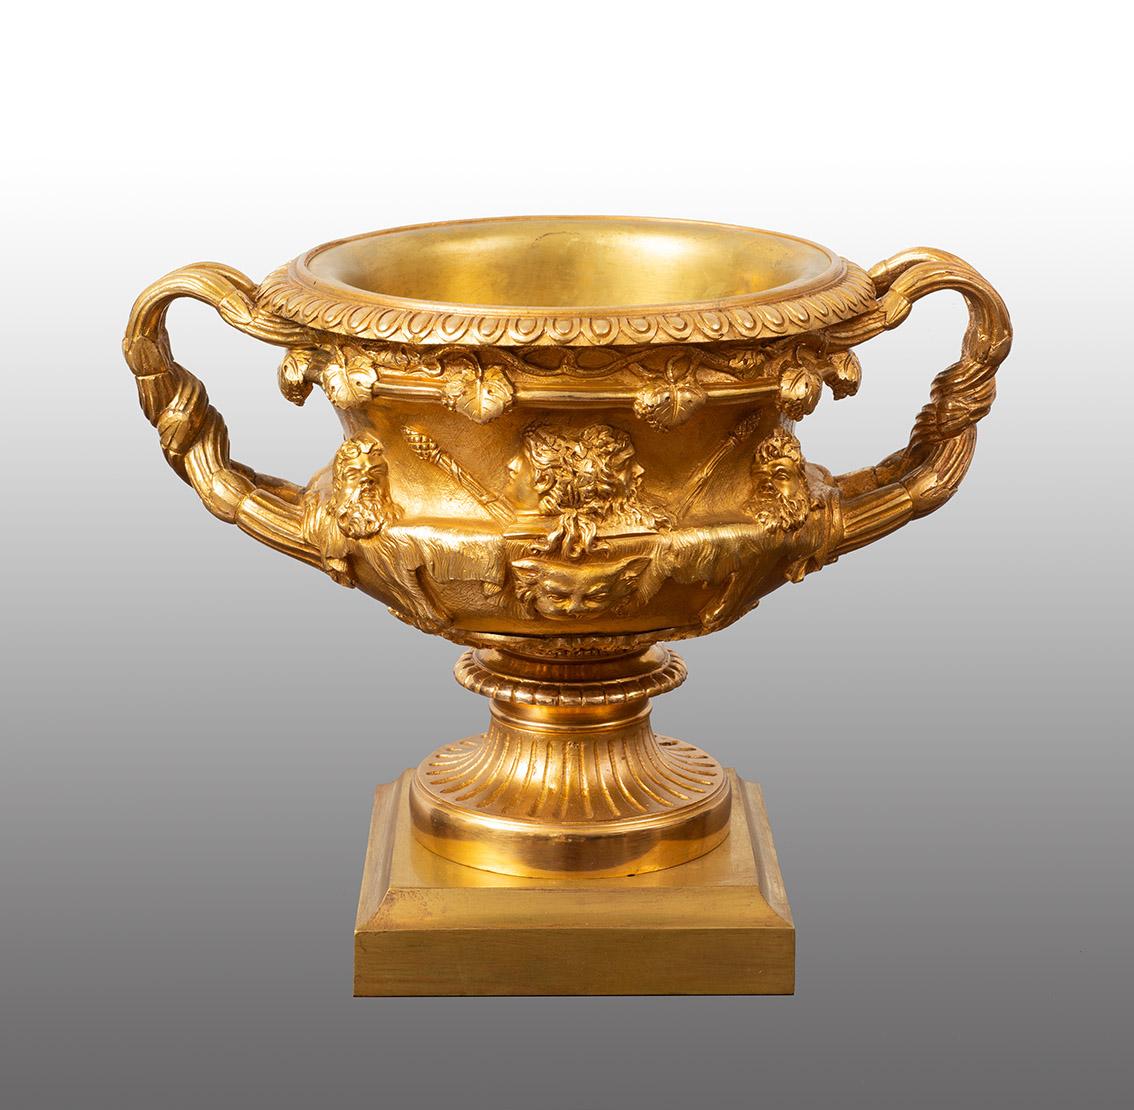 Unknown Figurative Sculpture - Antique Napoleon III French gilt bronze 19th century cup/centerpiece.